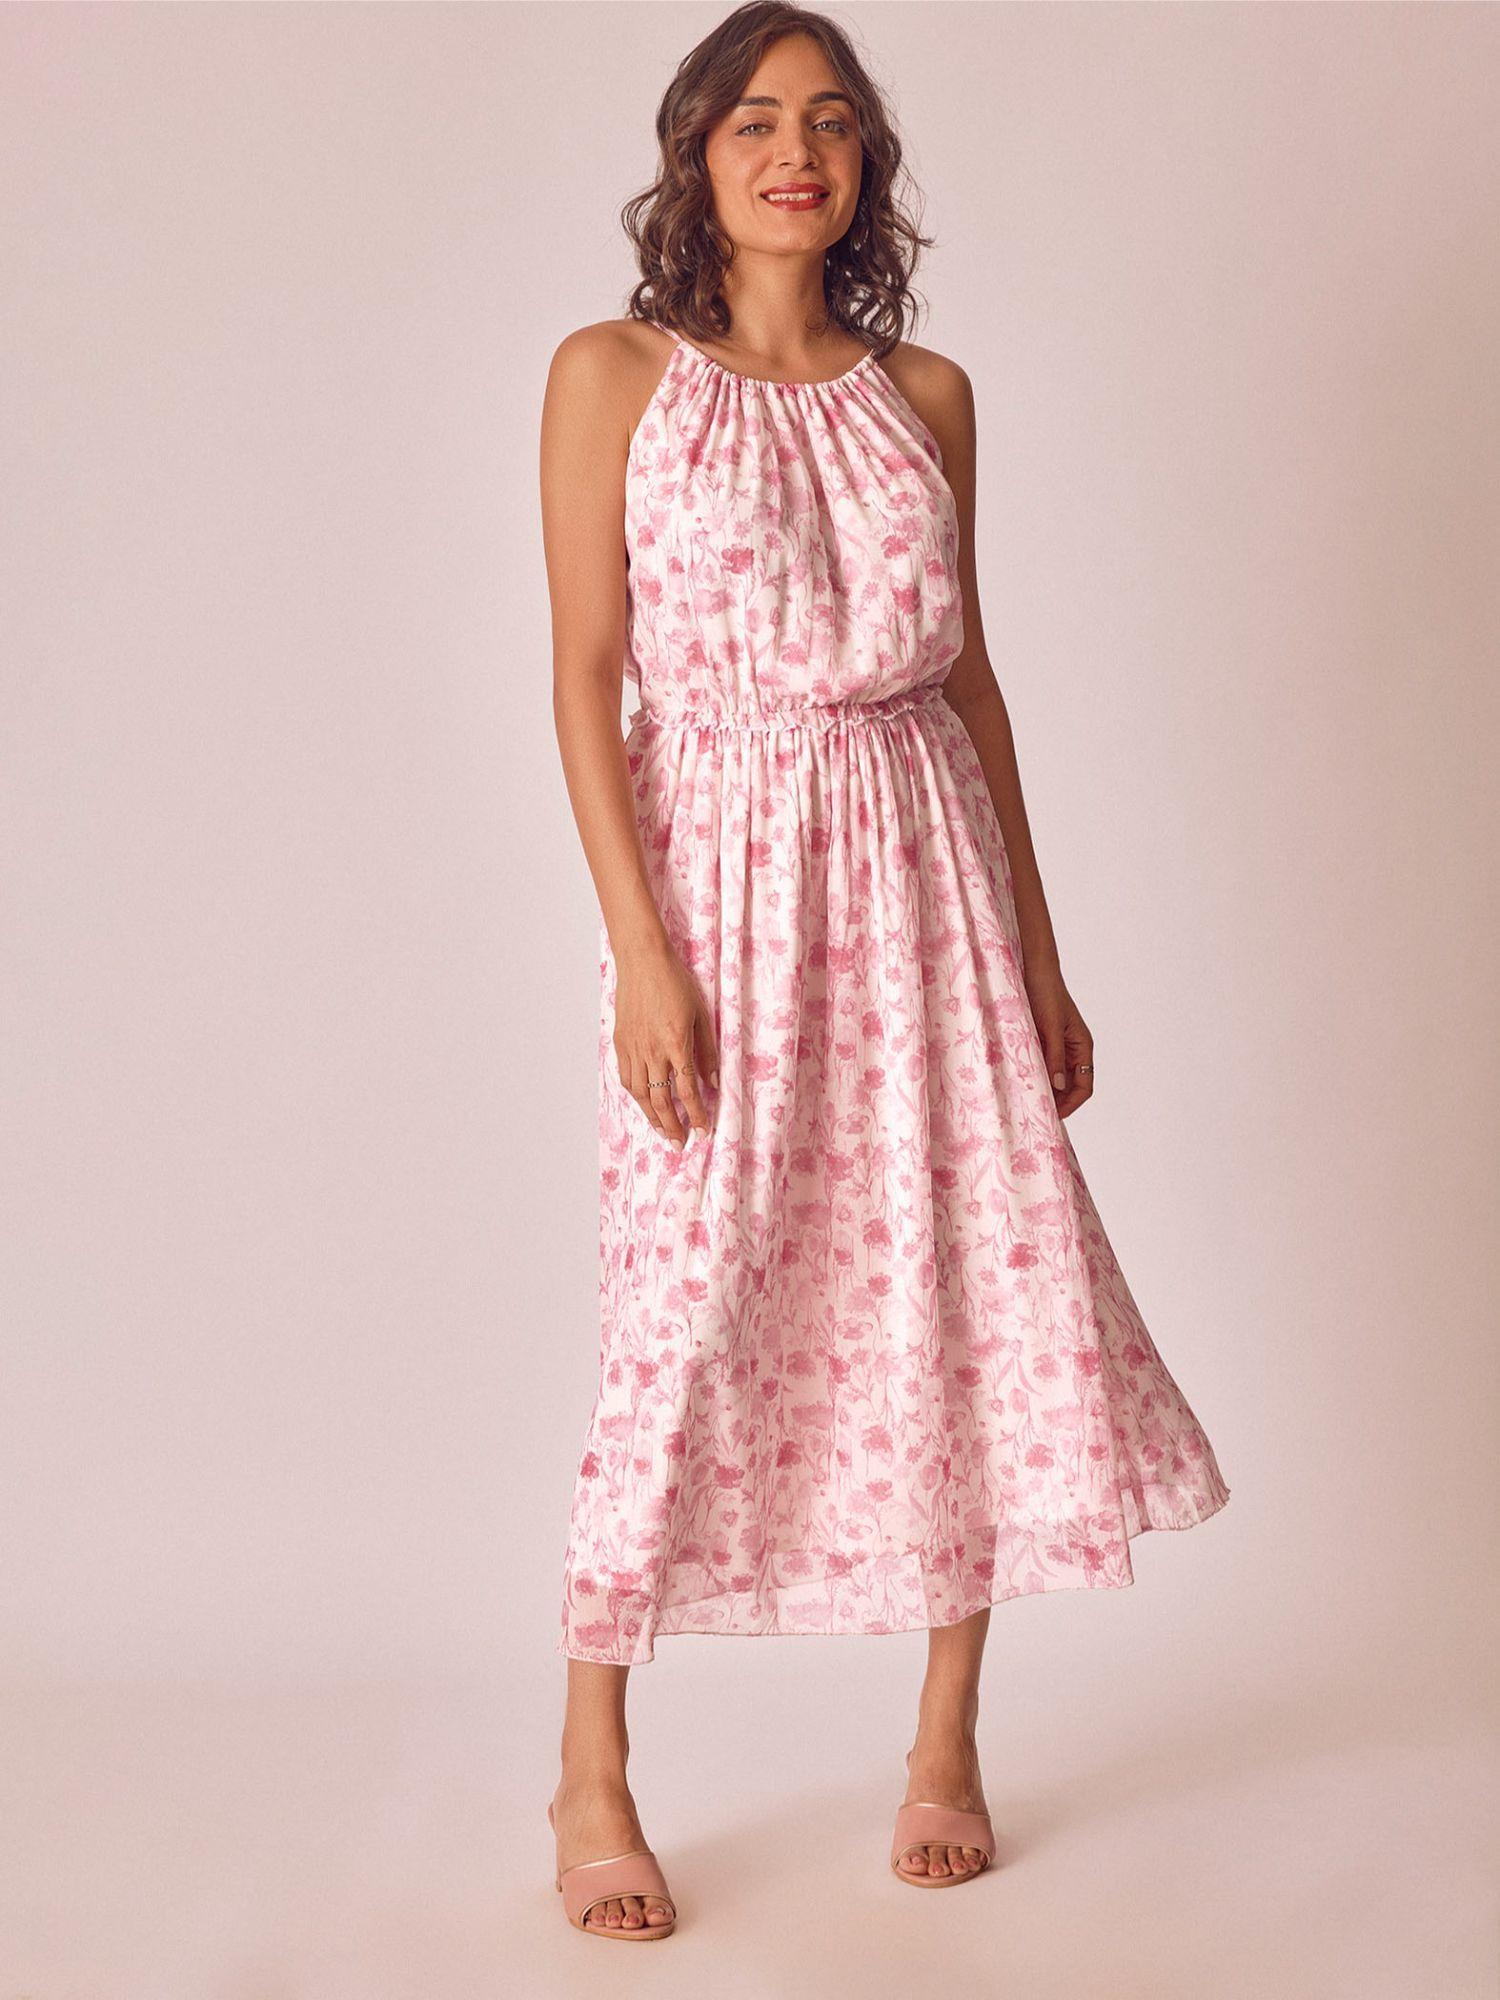 cherry-blossom-in-cut-dress